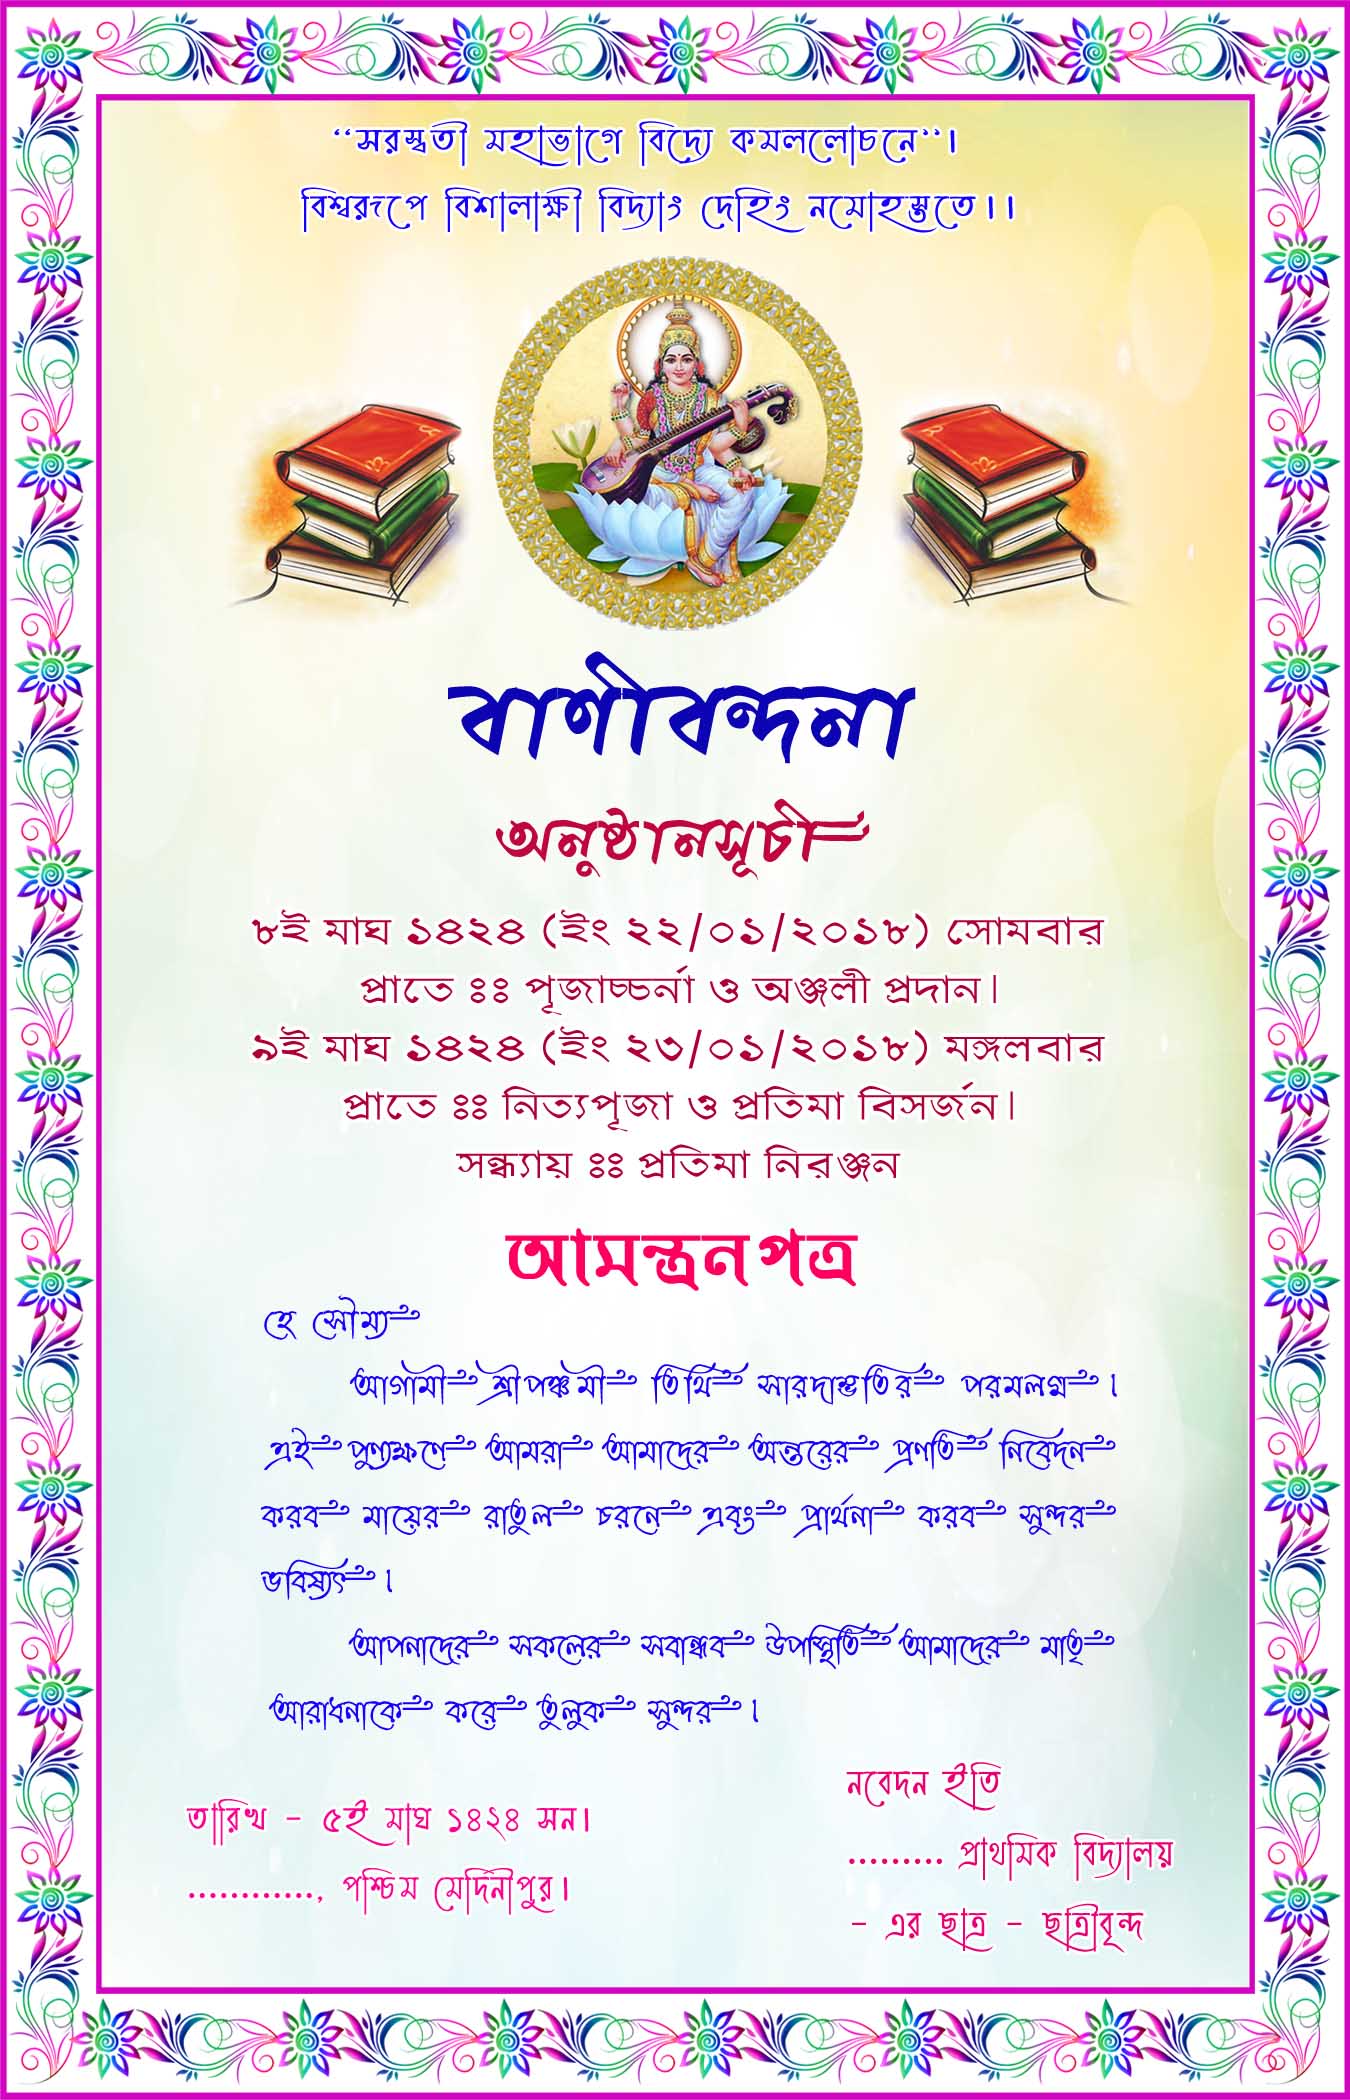 Annaprasan Invitation Card In Bengali Online Webcas.org